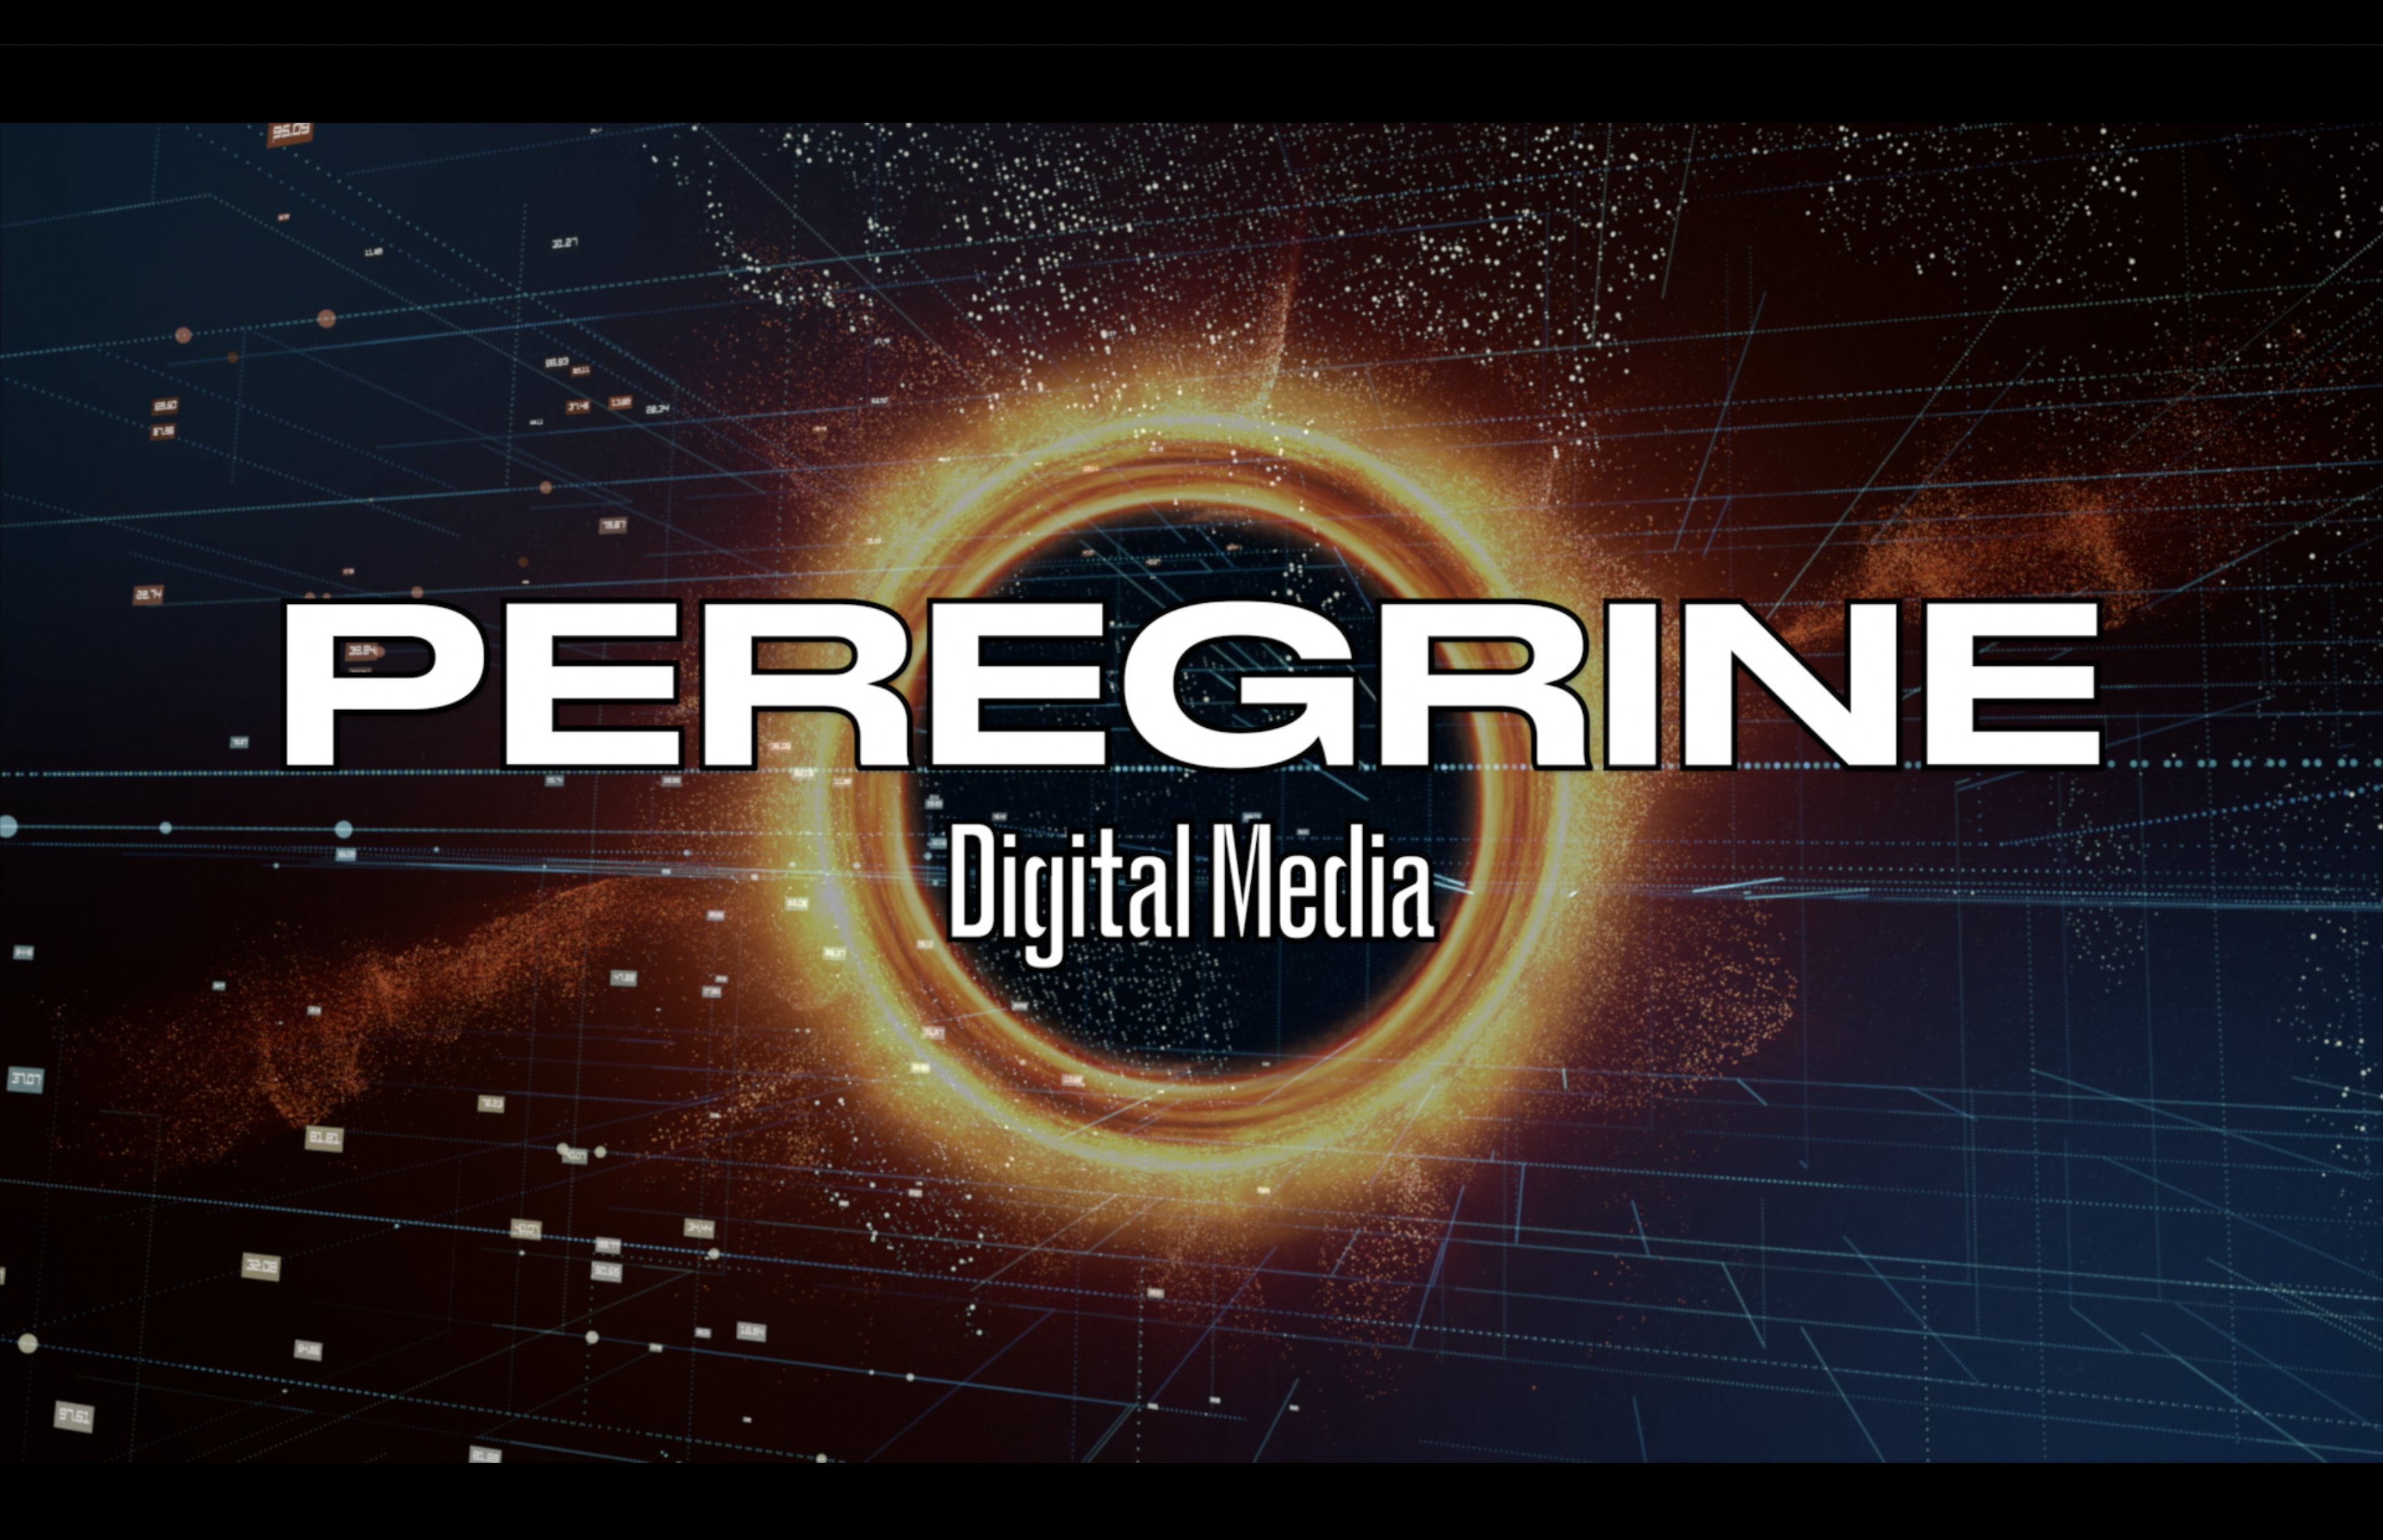 Peregrine Digital Media